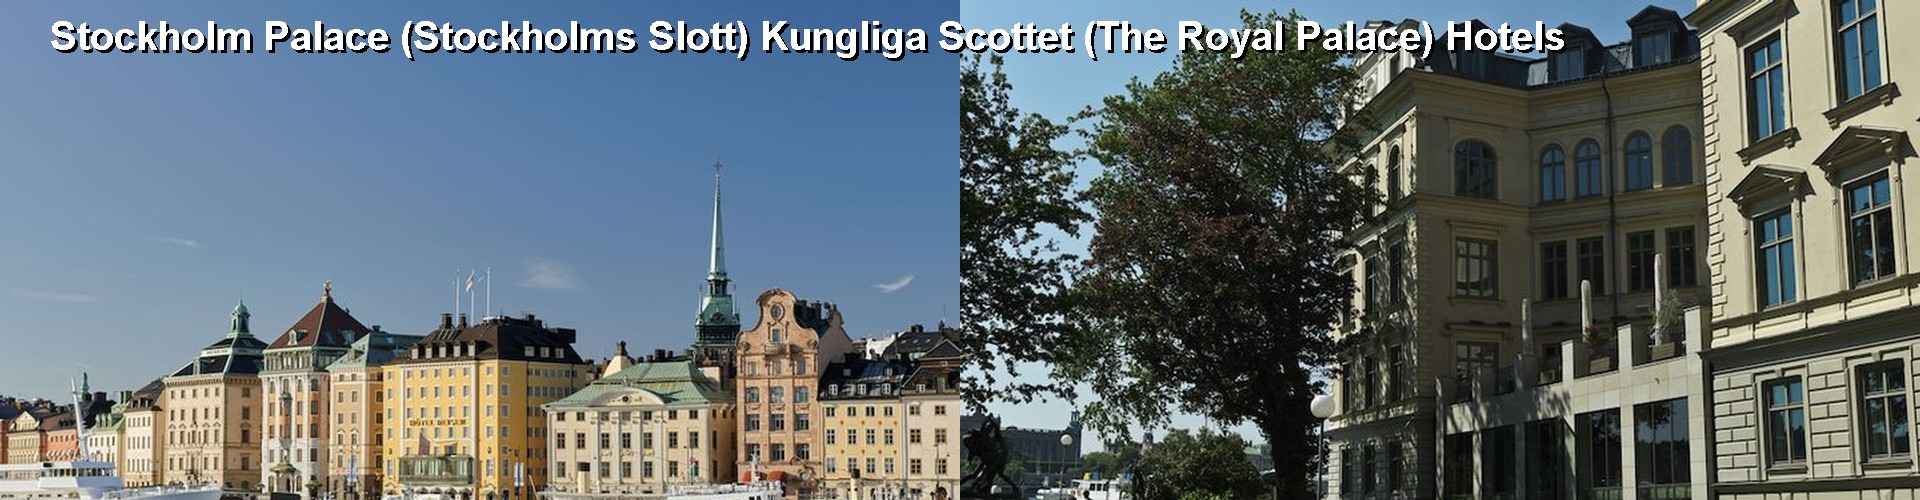 5 Best Hotels near Stockholm Palace (Stockholms Slott) Kungliga Scottet (The Royal Palace)